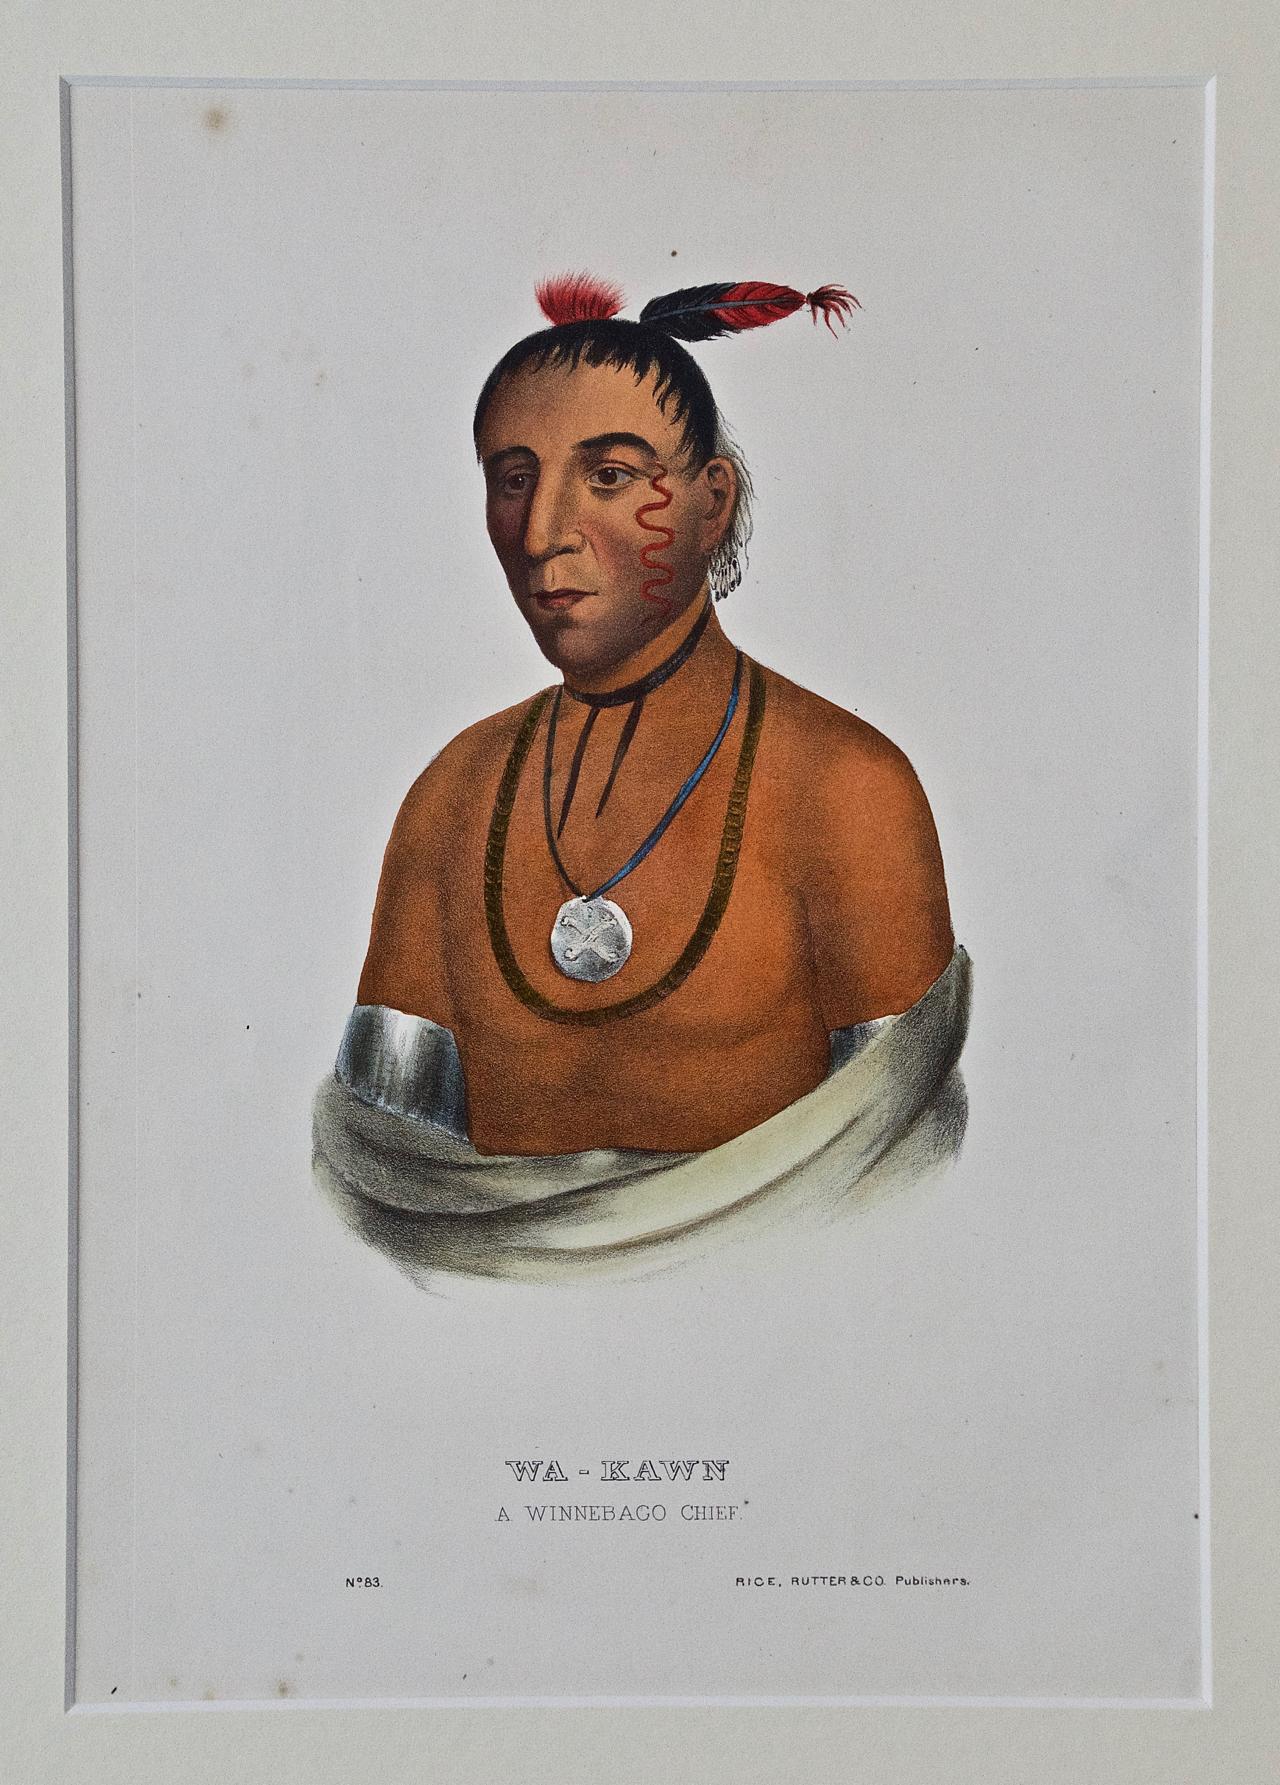 Wa-Kawn, A Winnebago Chief: An Original Hand-colored McKenney & Hall Engraving